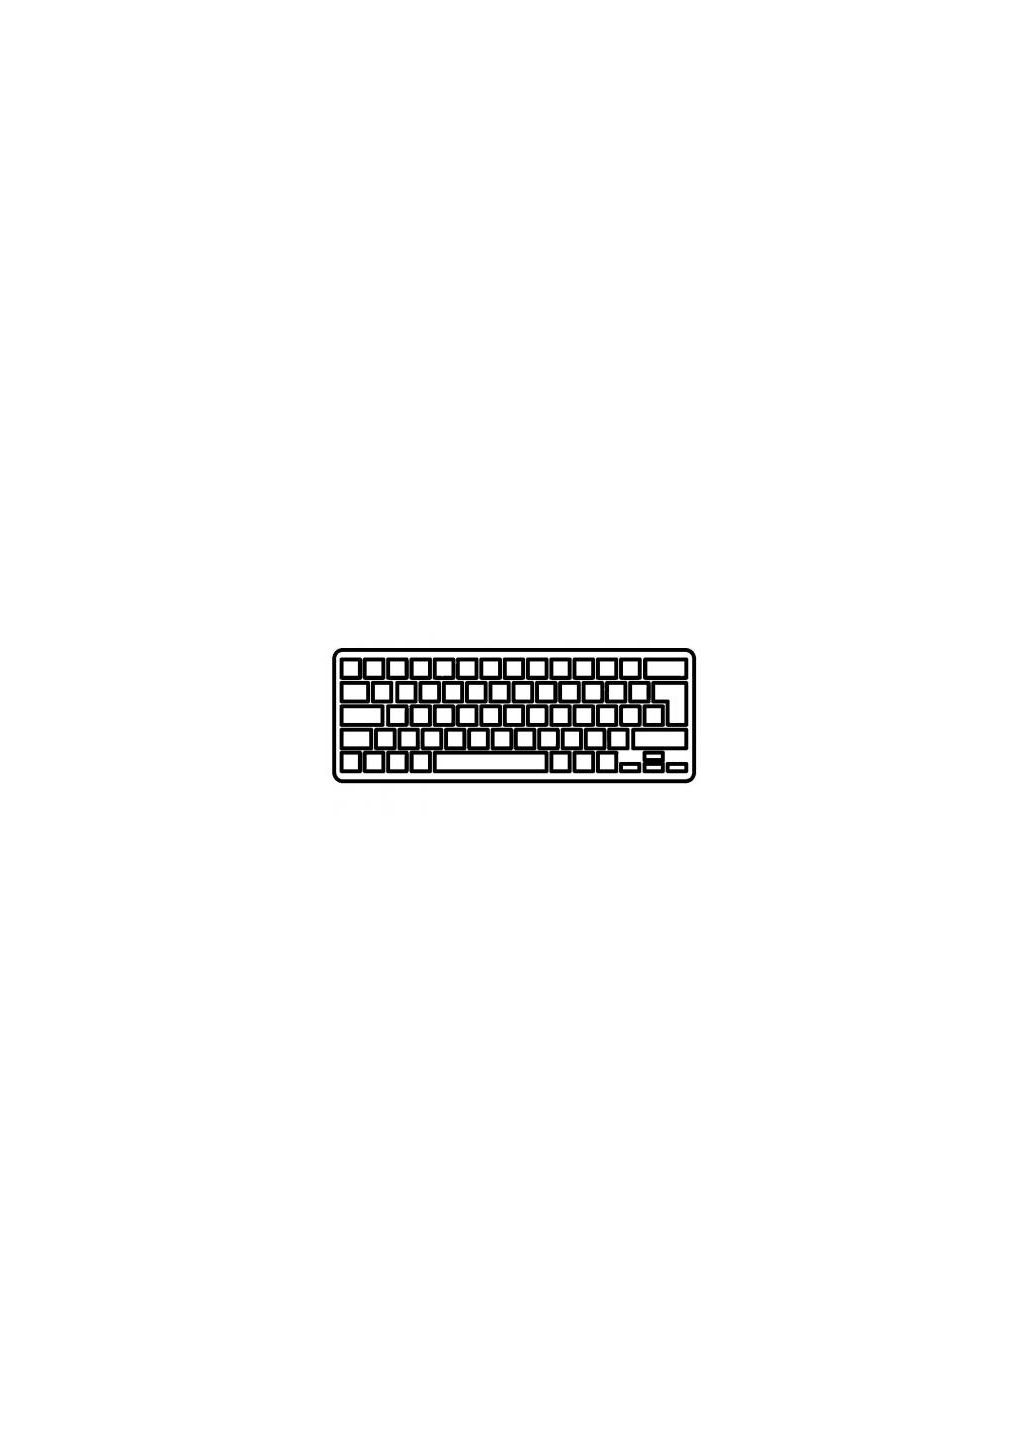 Клавиатура ноутбука (A43091) Lenovo ideapad a800/v60/v66/v80 series черная ru (276707956)